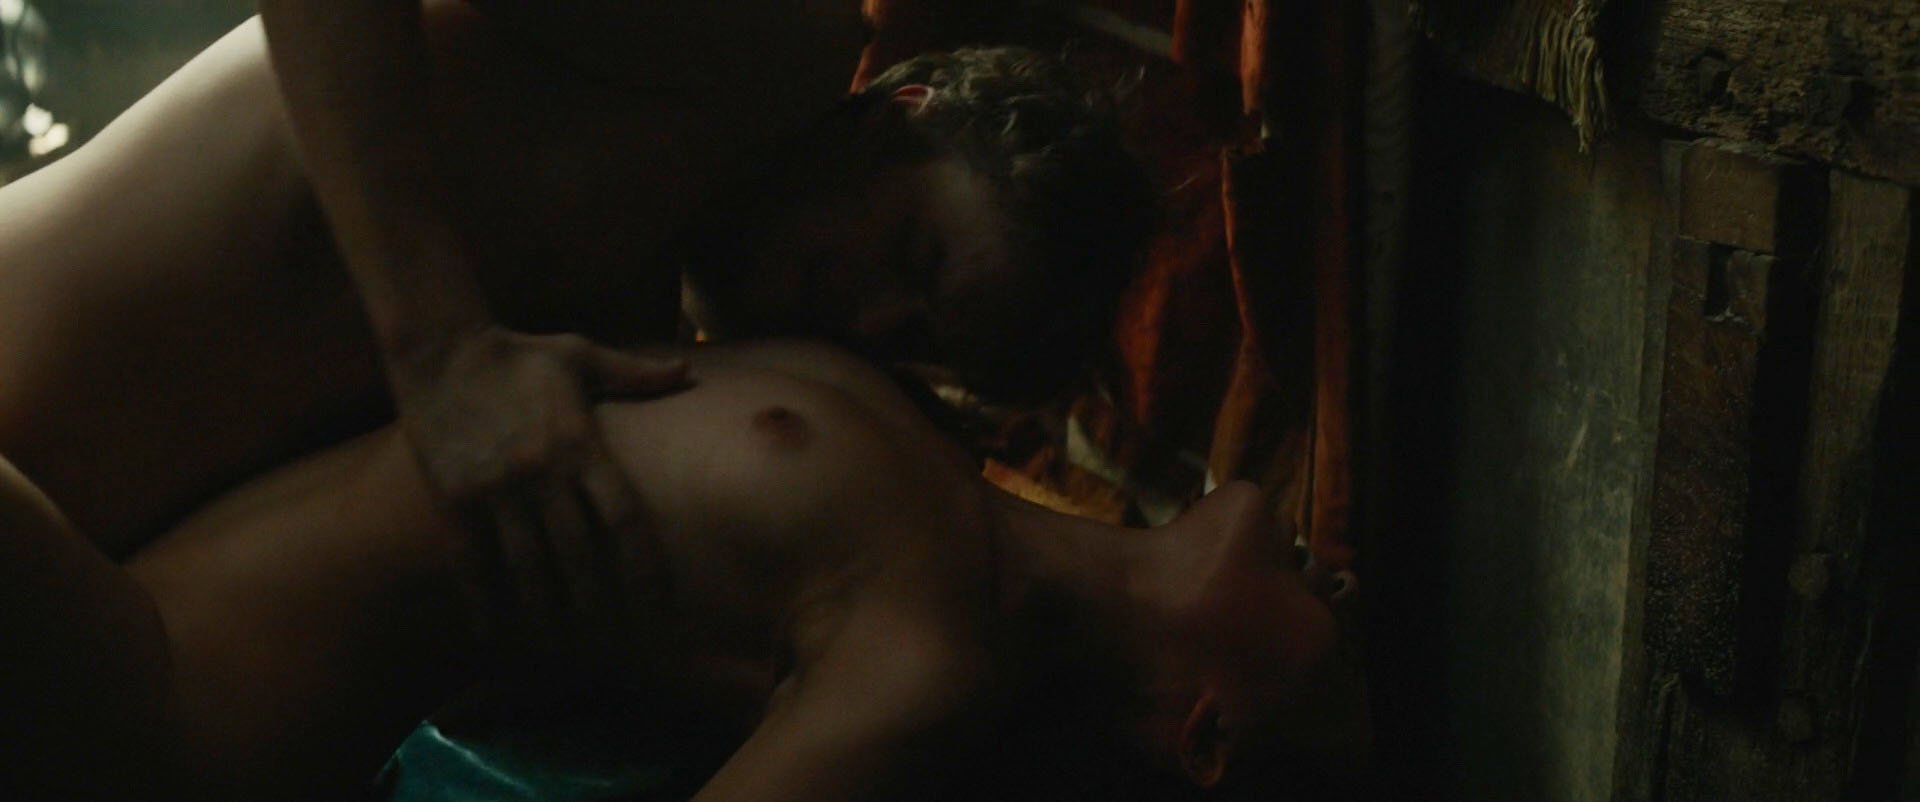 Alicia Vikander in nude scene from Tulip Fever (2017). 